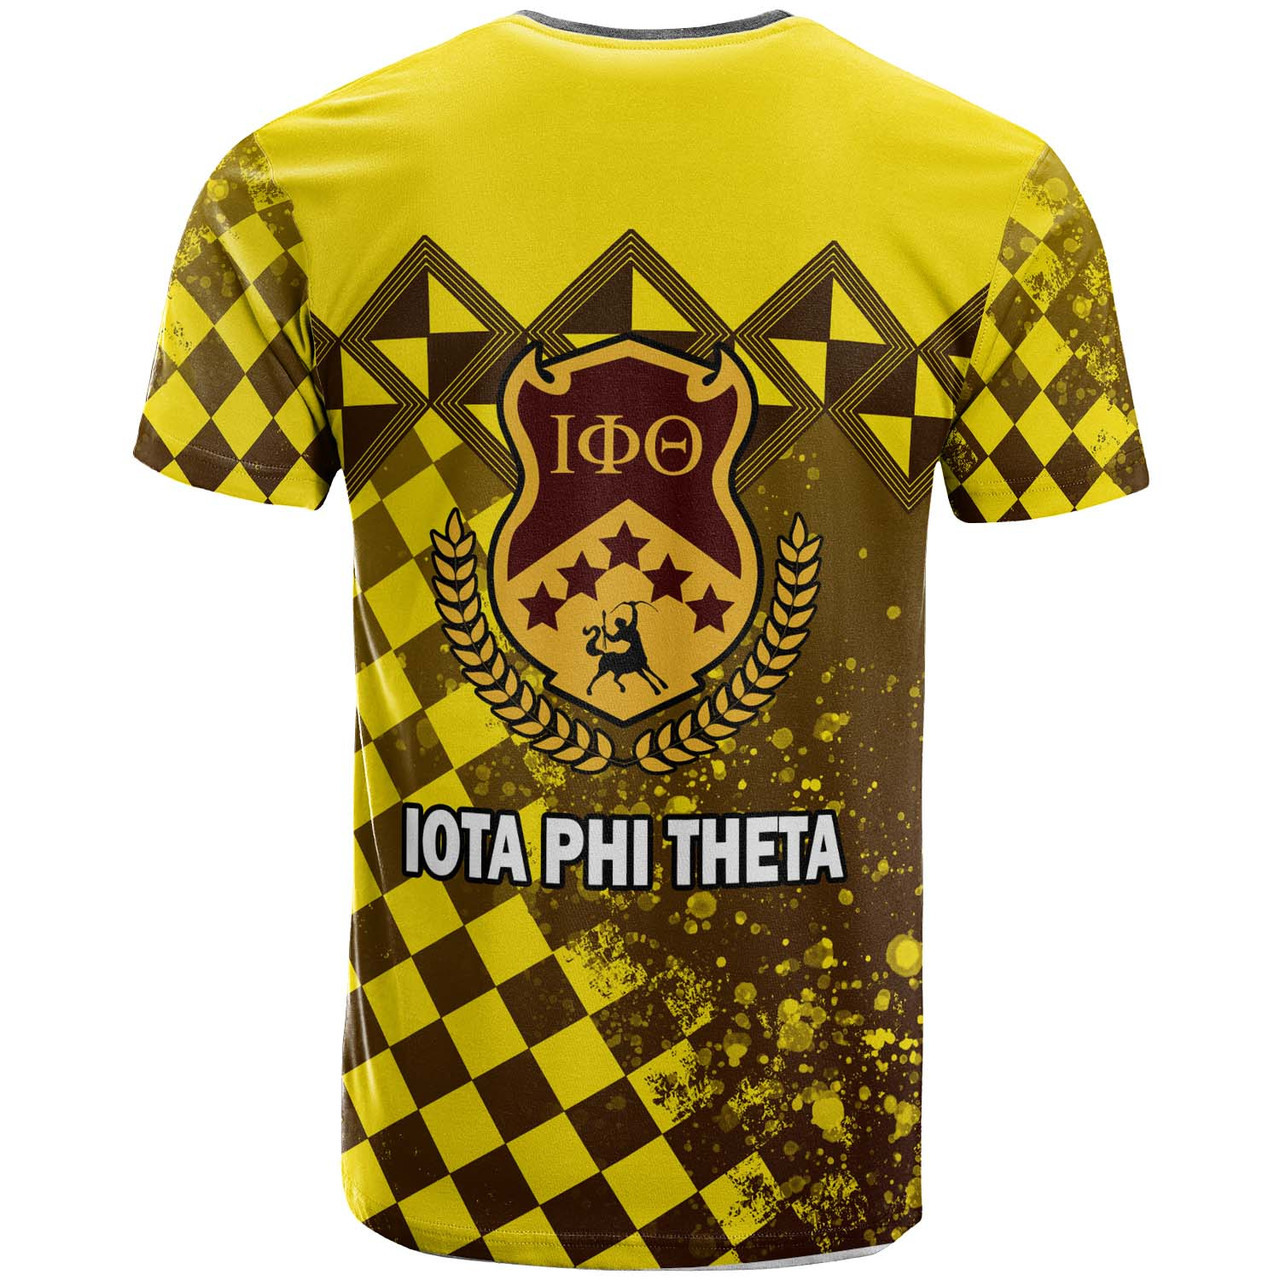 Iota Phi Theta T-shirt - Fraternity Iota Phi Theta Centaur Checkered Patterns T-shirt